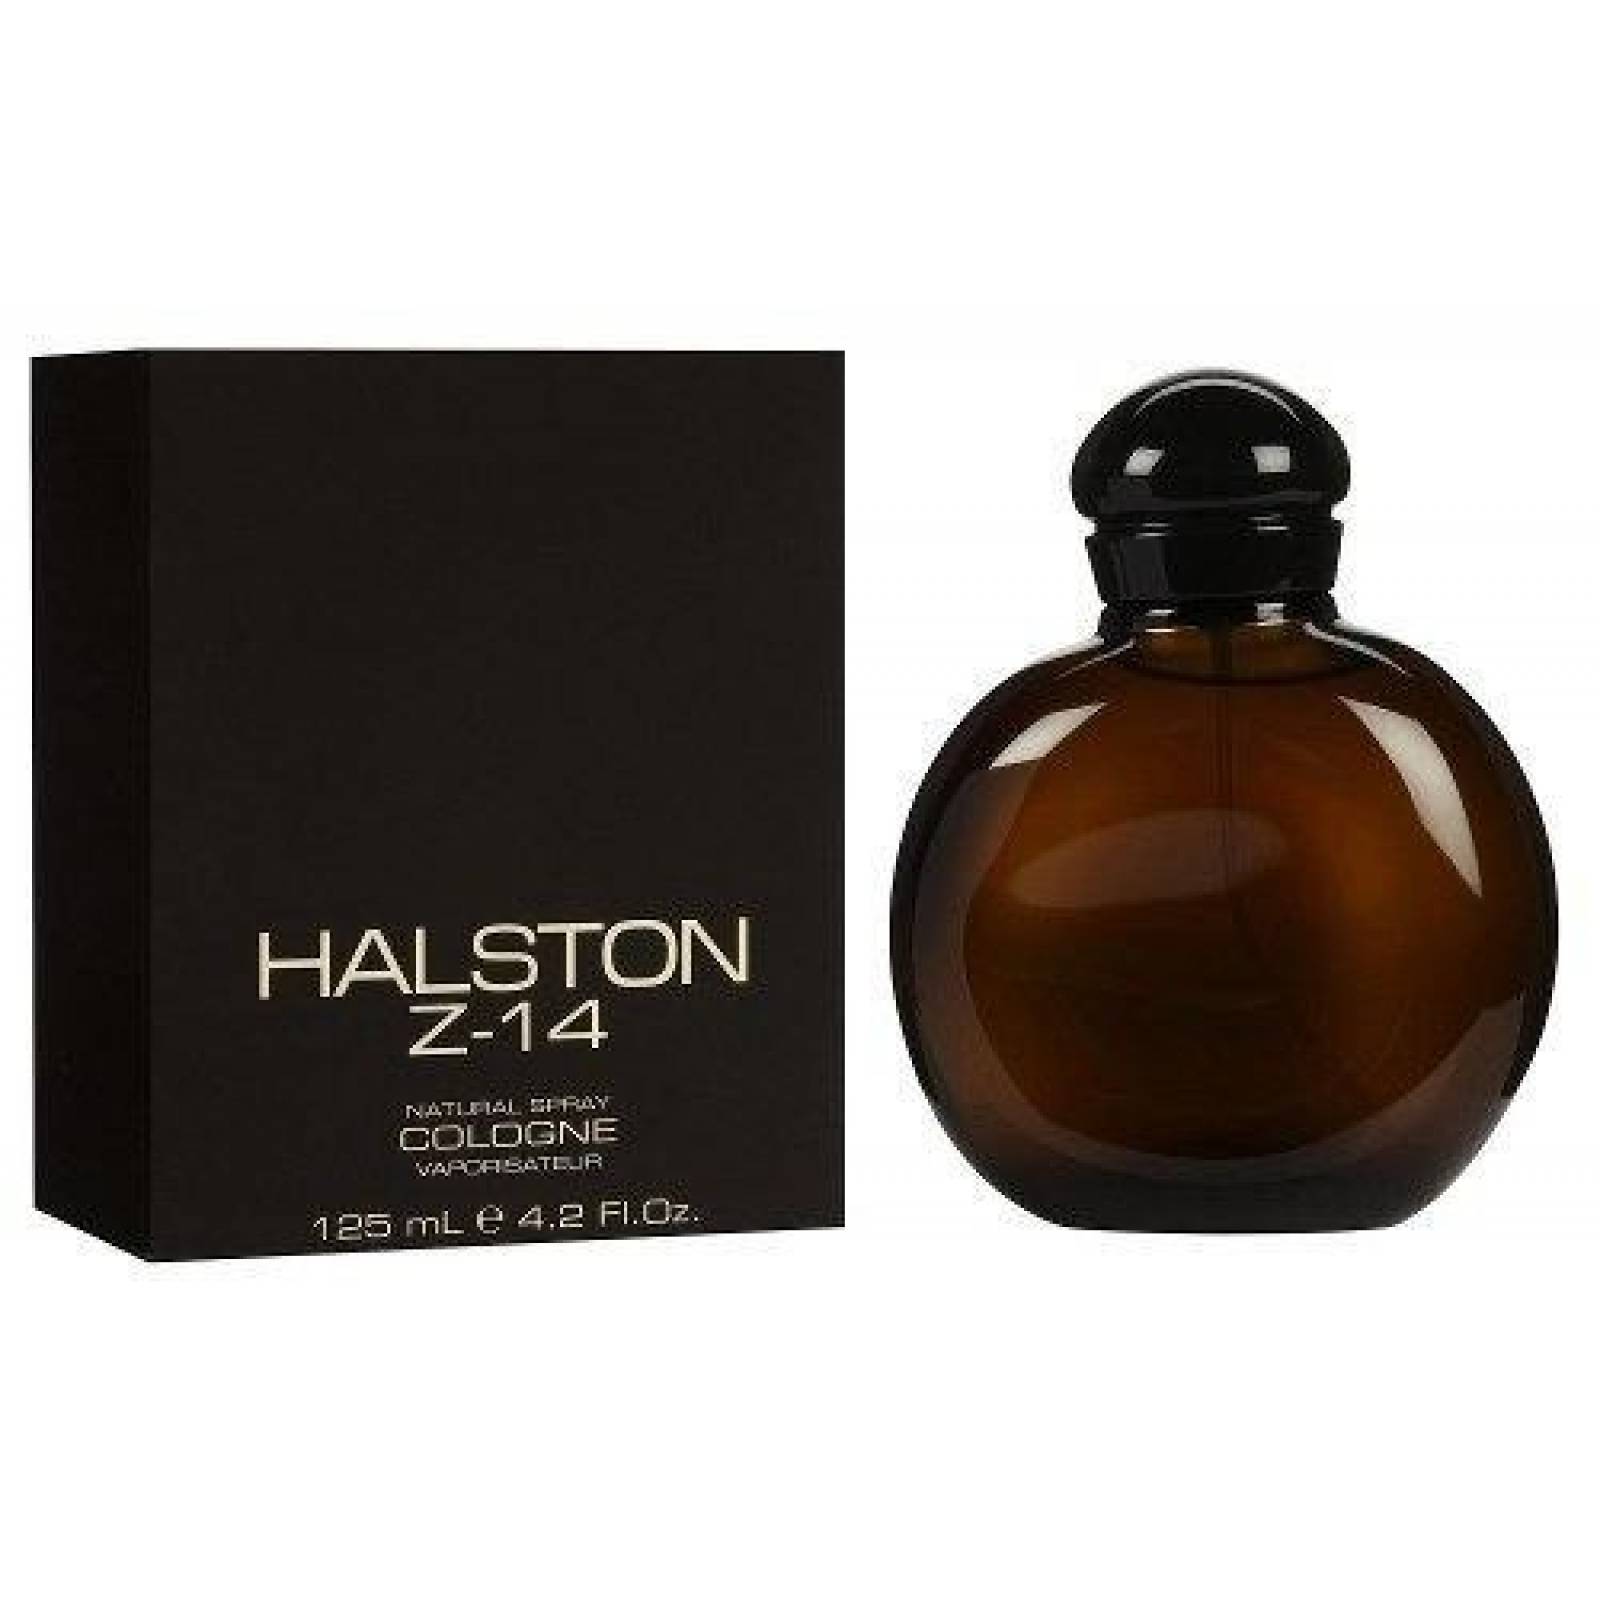 Halston Z-14 Caballero 236 Ml Edc - Perfume Original